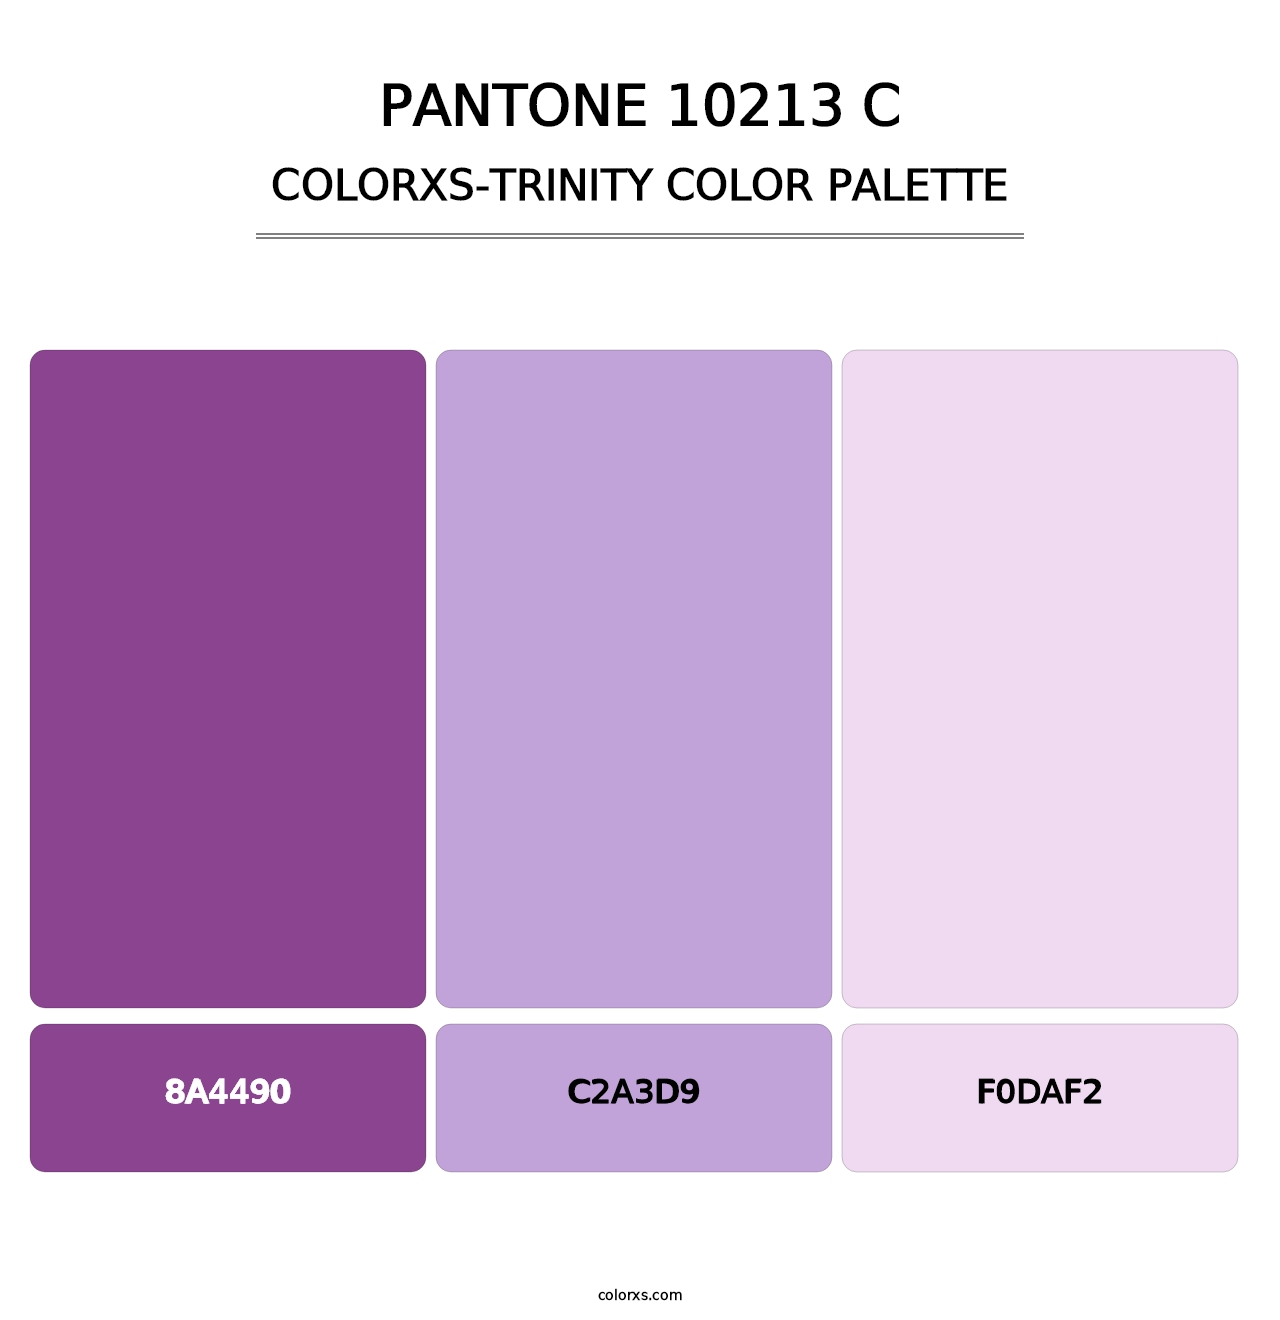 PANTONE 10213 C - Colorxs Trinity Palette